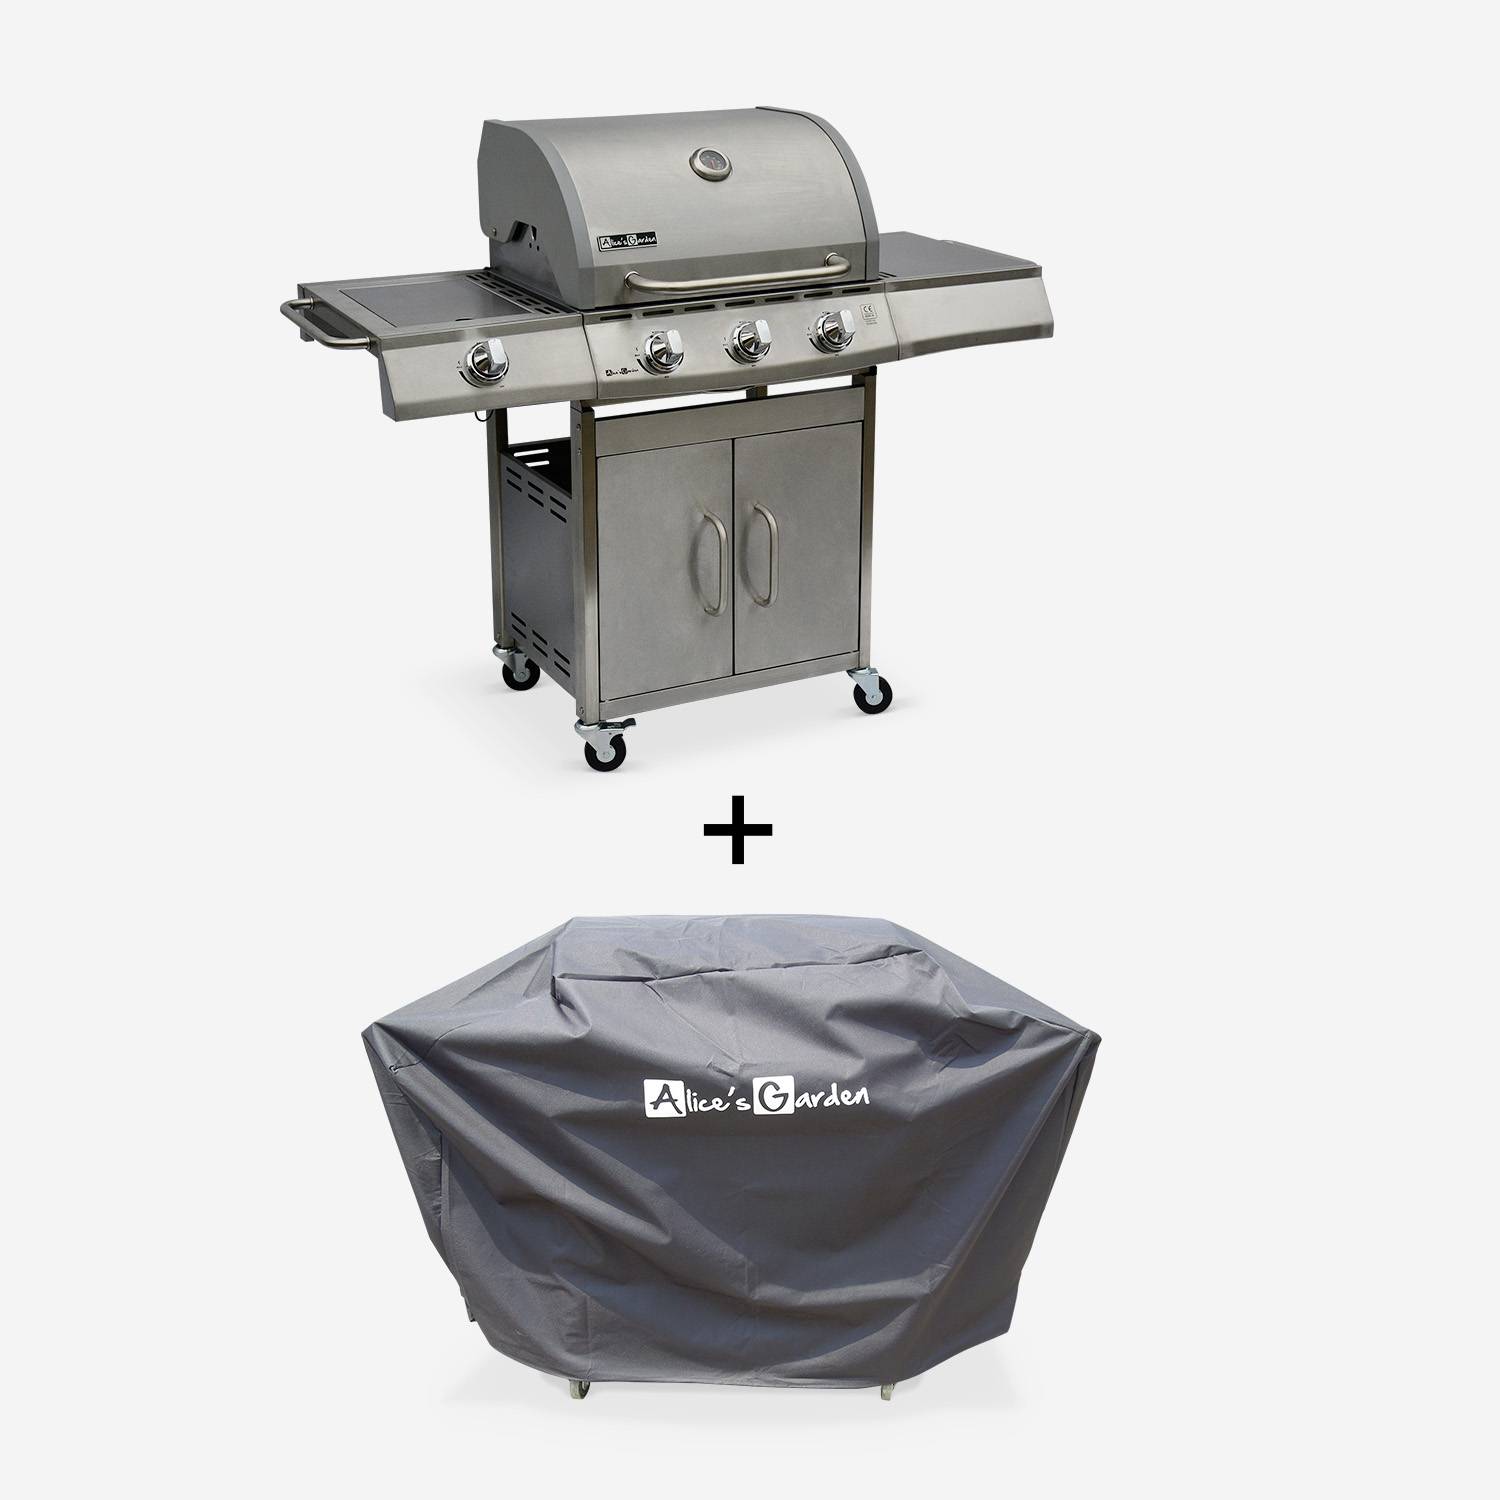 Barbecue gaz inox 14kW – Richelieu inox – Barbecue 4 brûleurs dont 1 feu latéral,grill et plancha, housse | sweeek